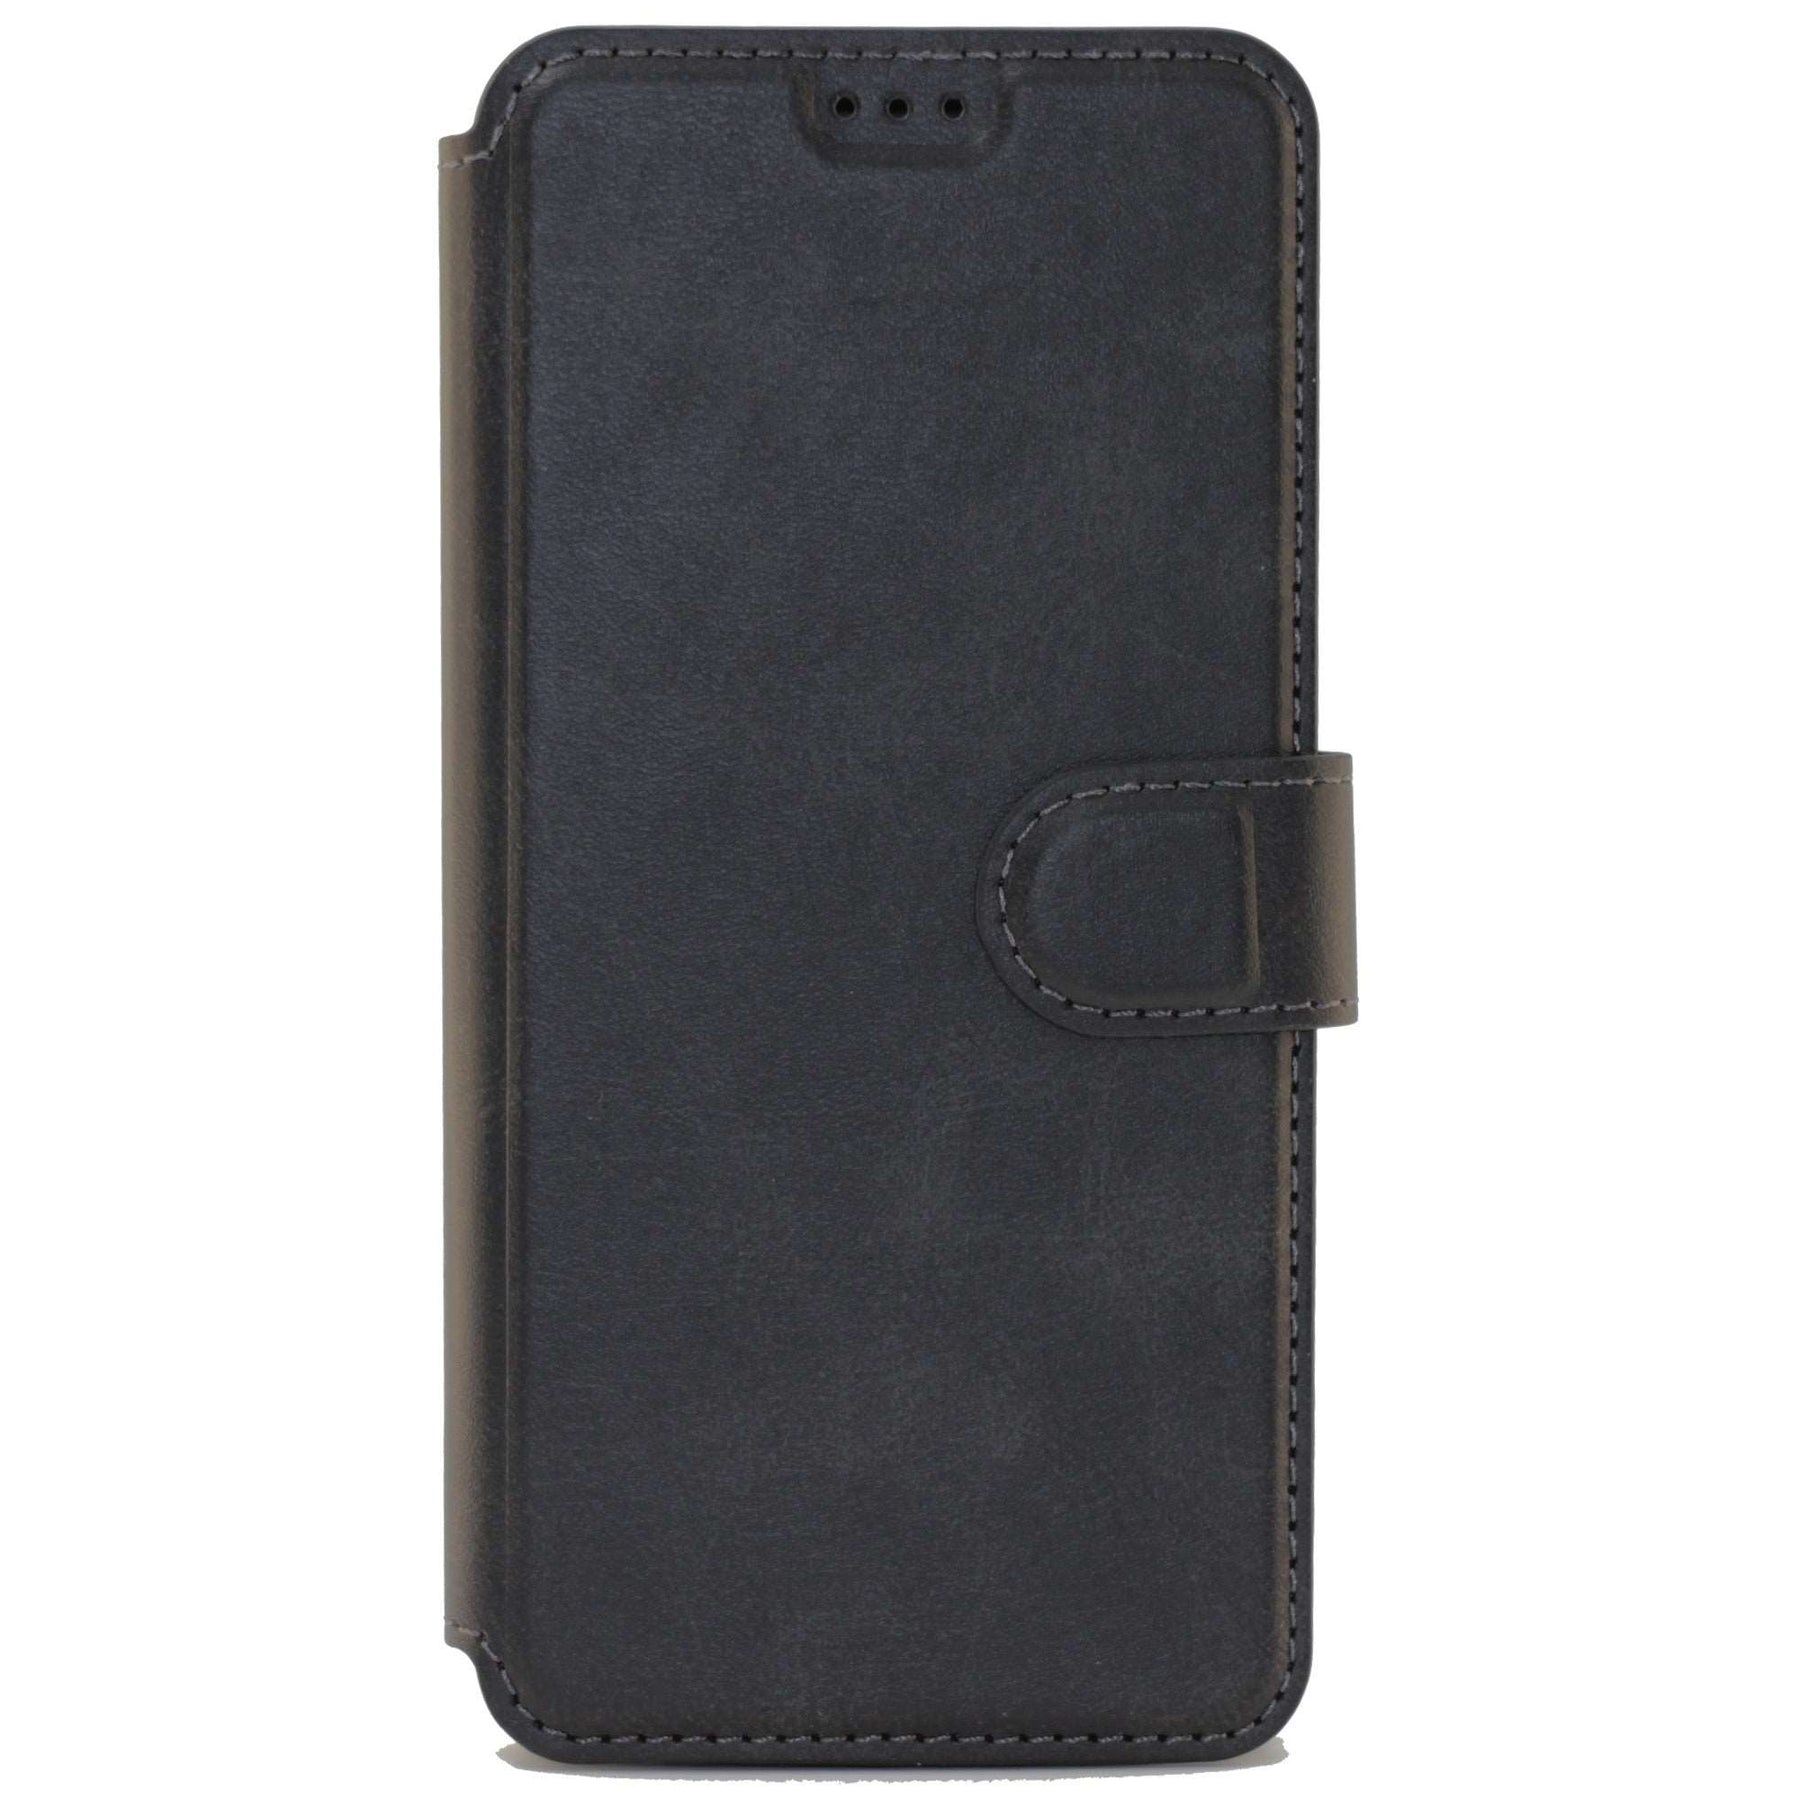 Huawei P30 Lite, Leather Wallet Case, Color Black.